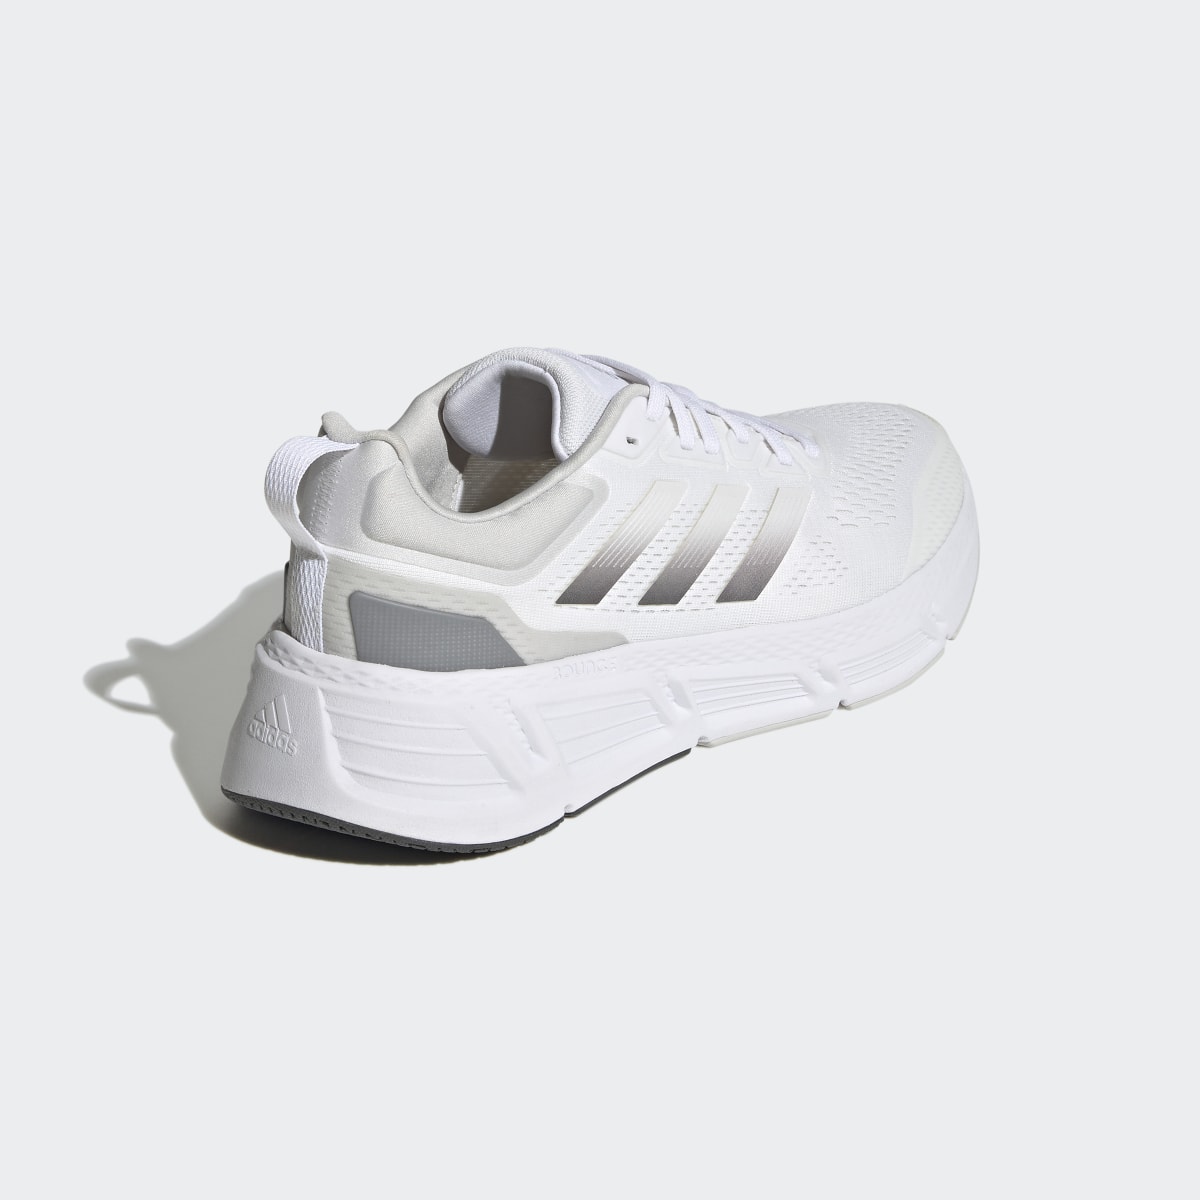 Adidas Questar Shoes. 6